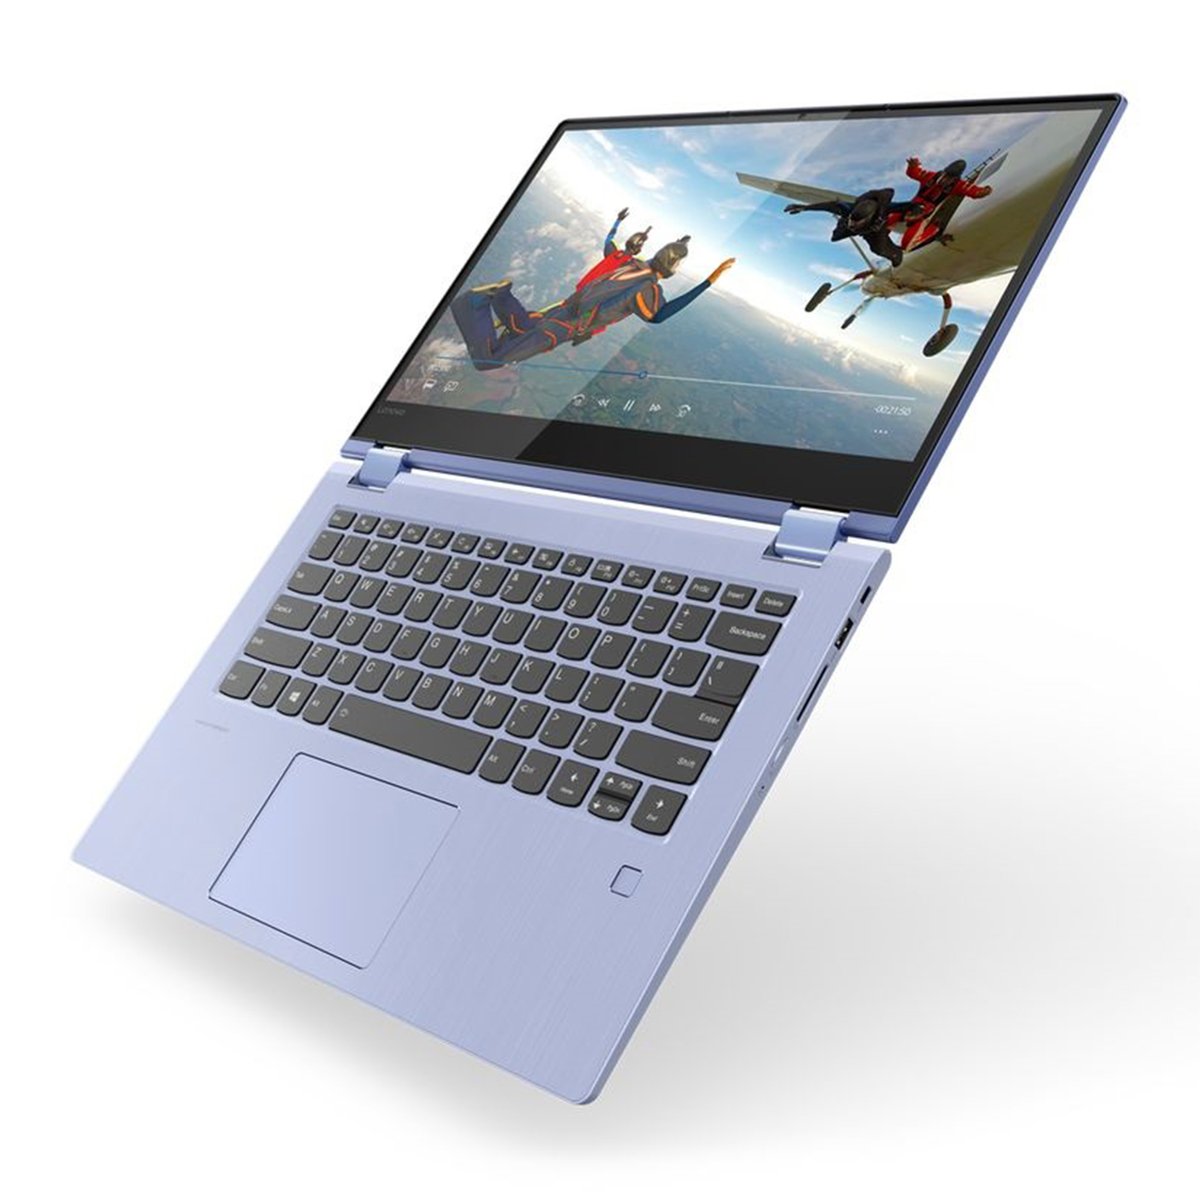 Lenovo Yoga 530-81EK0151AX Core i5 Blue